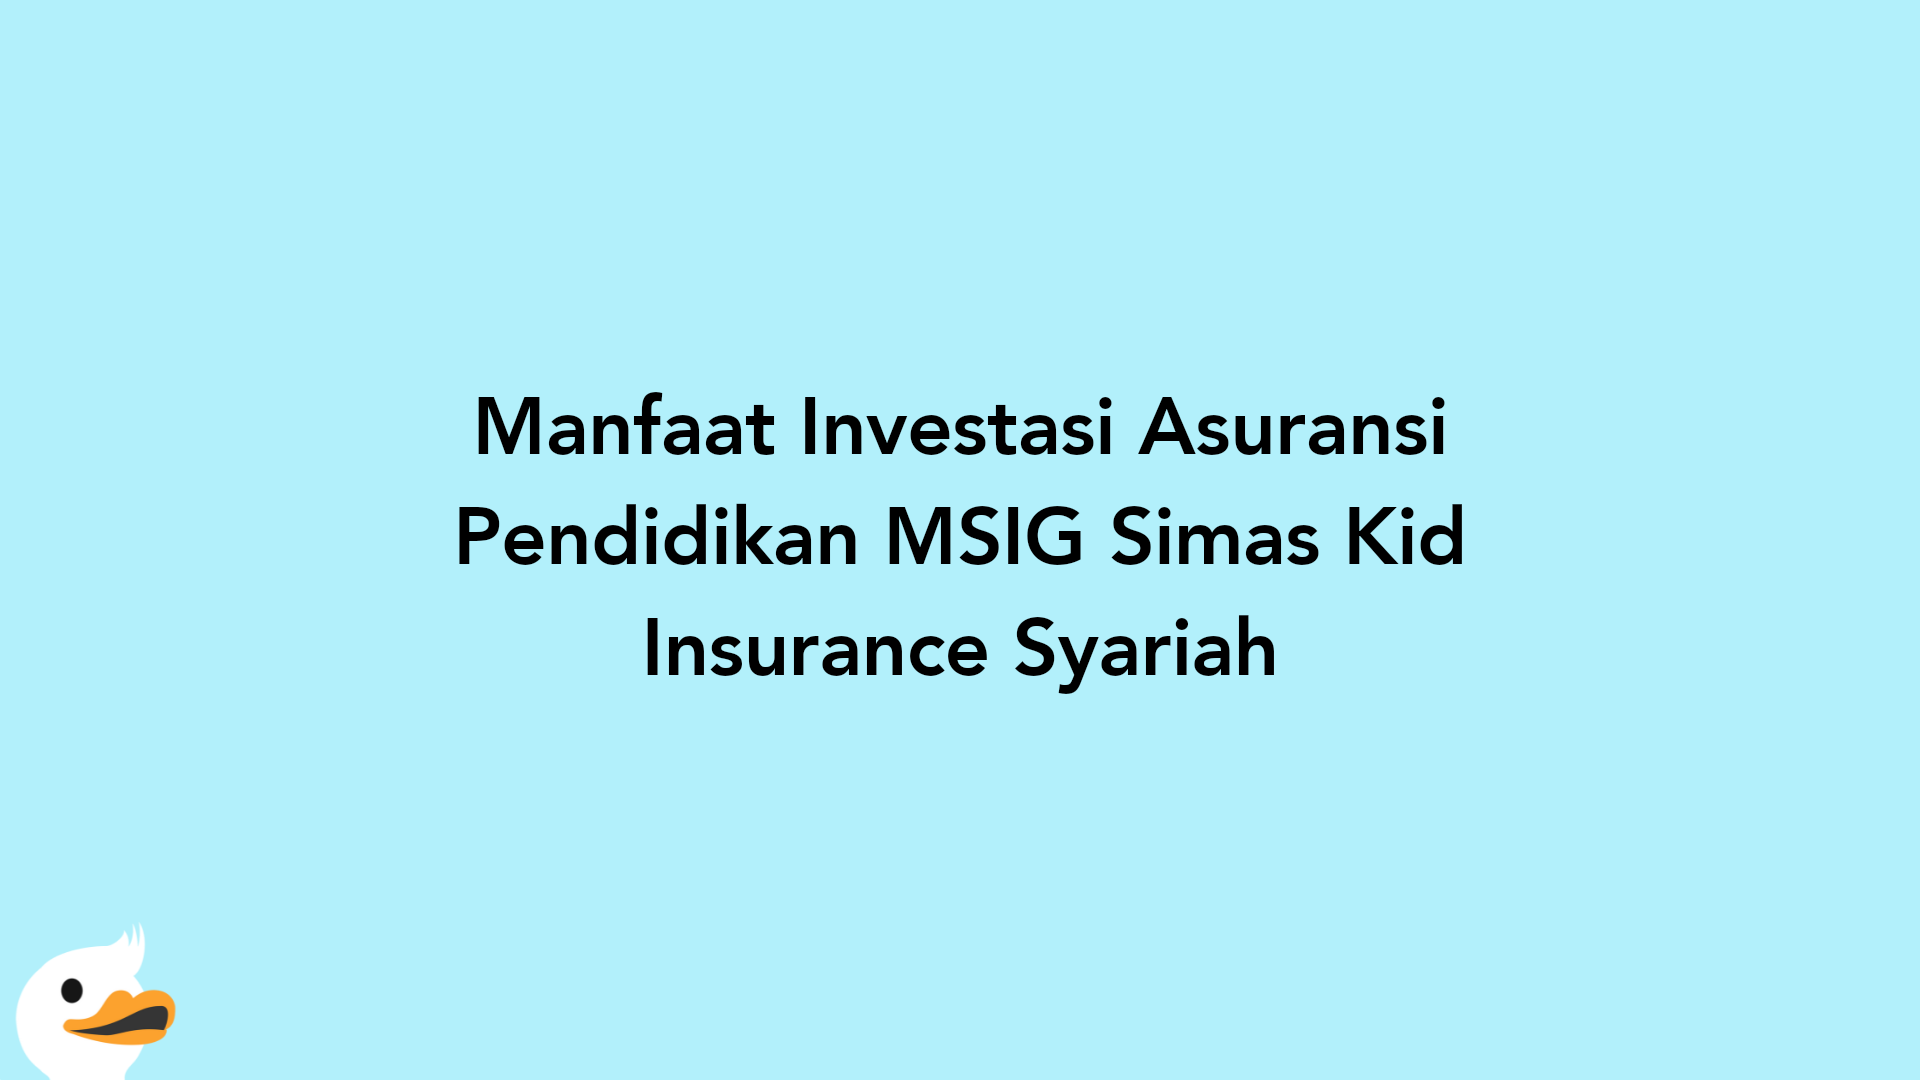 Manfaat Investasi Asuransi Pendidikan MSIG Simas Kid Insurance Syariah